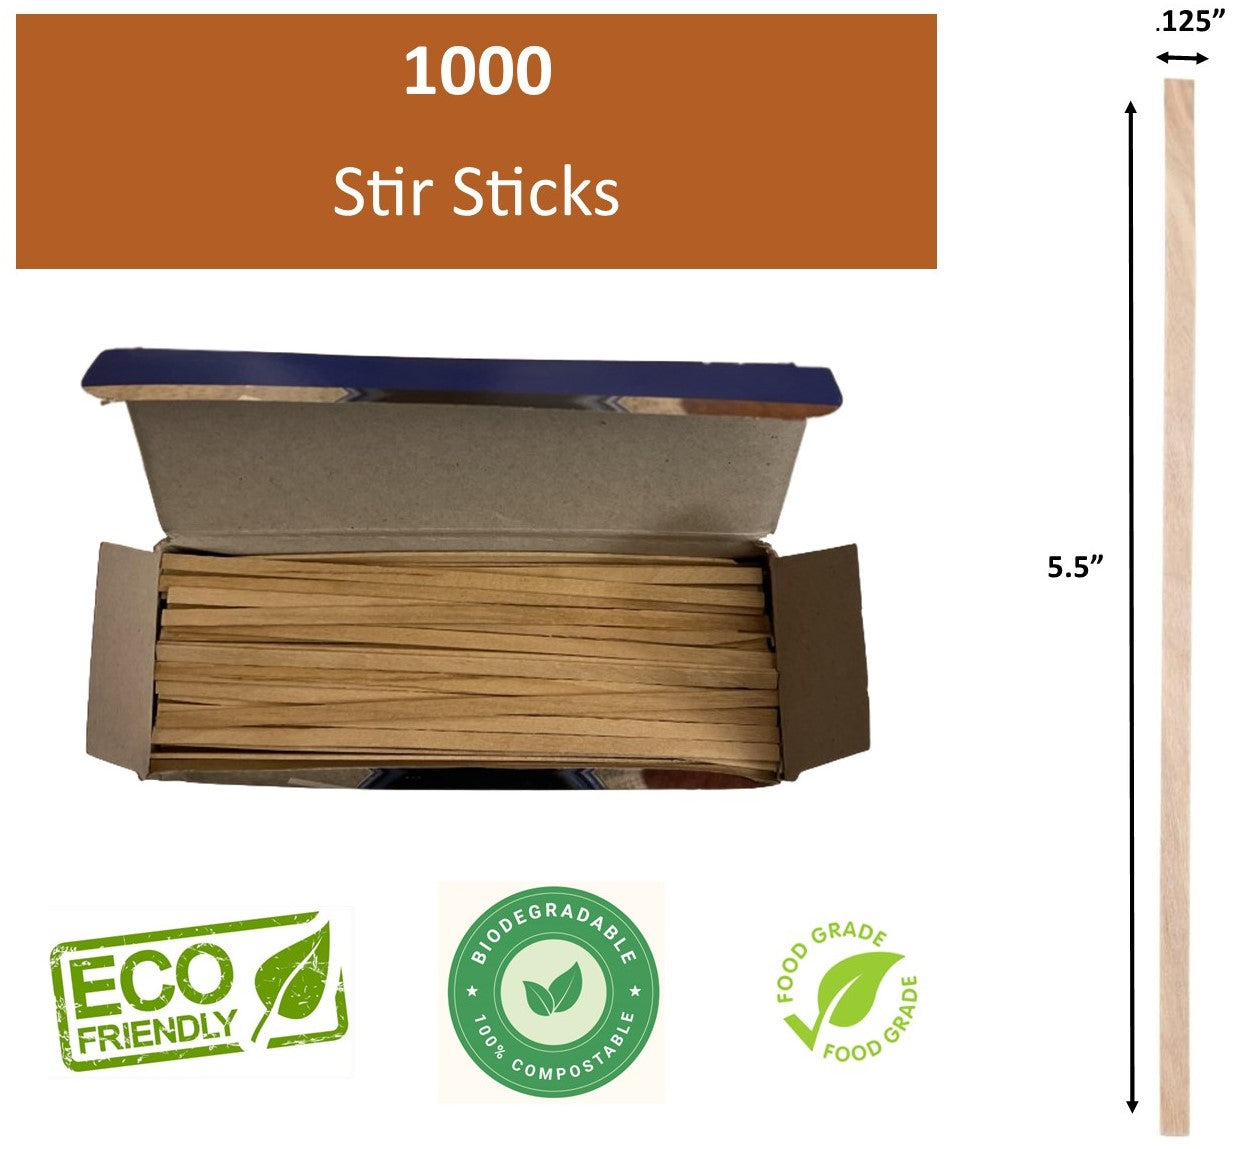 1,000 Count - 5.5-Inch Birch Wood Coffee Stirrers, Stir Sticks Smooth Splinter-Free Design, Made of Renewable, Eco-Friendly Wood